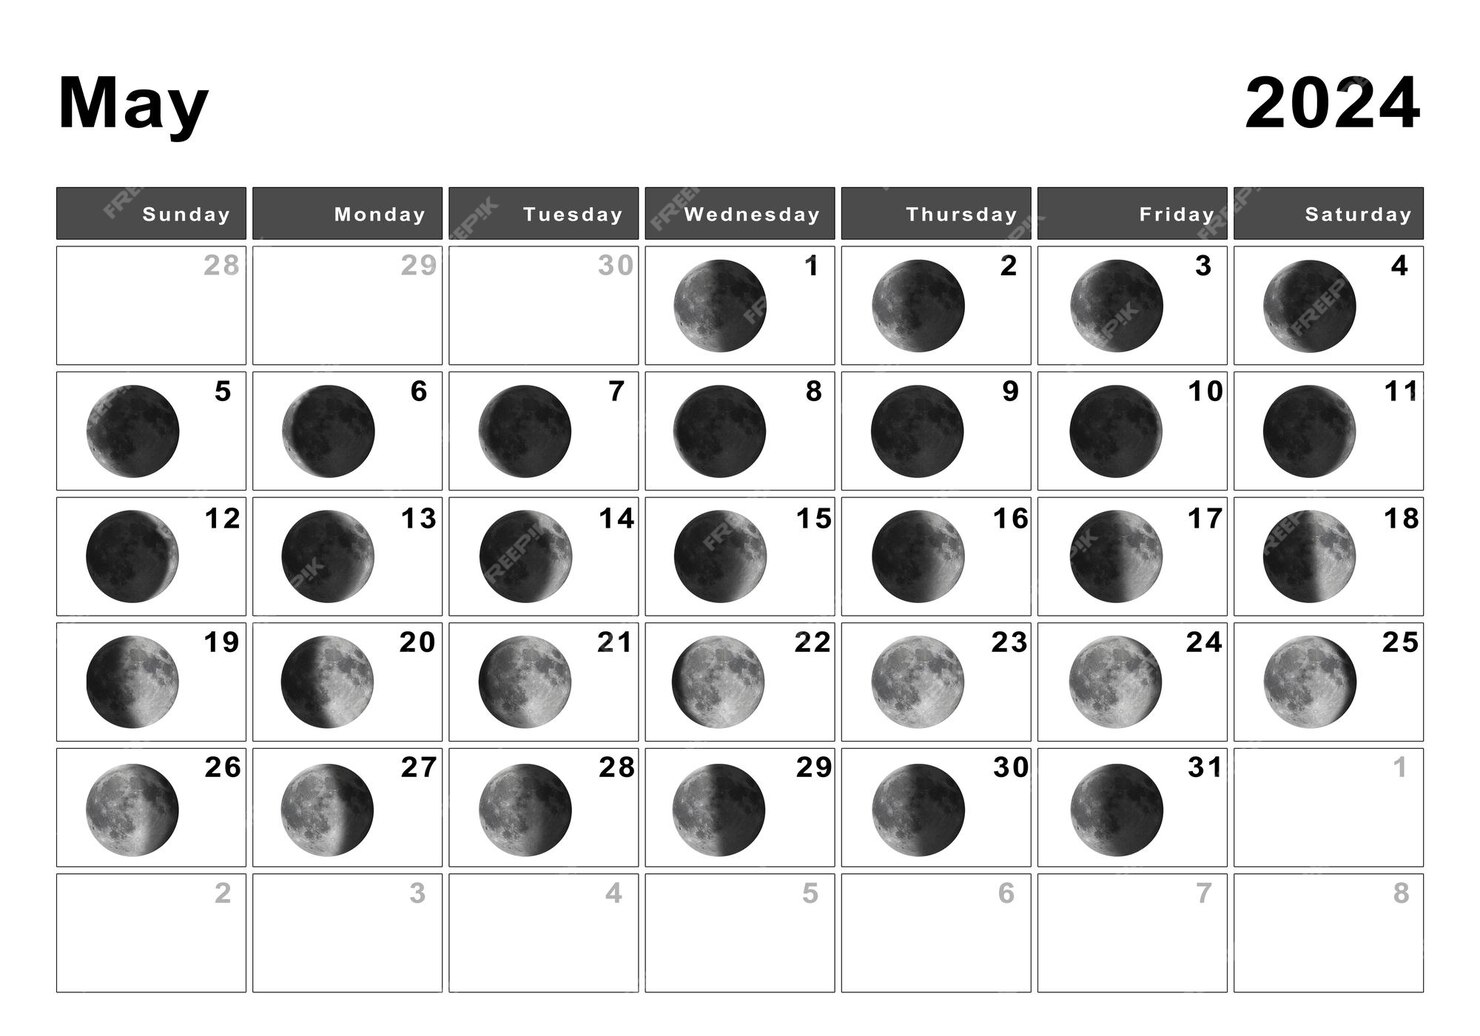 Mayo 2024 calendario lunar, ciclos lunares, fases lunares Foto Premium